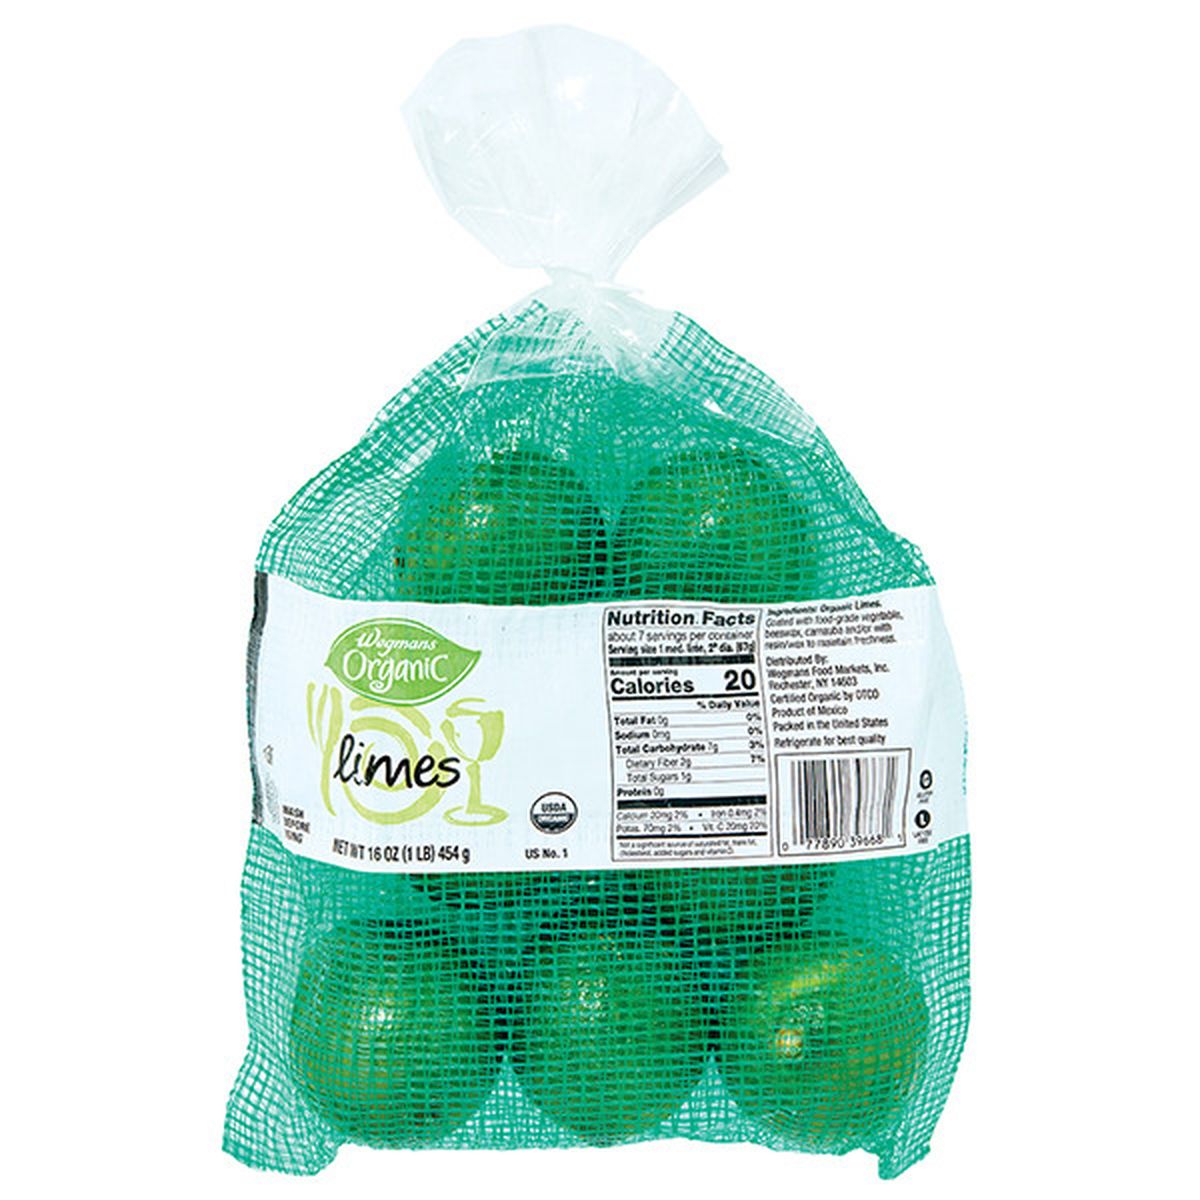 Calories in Wegmans Organic Limes, Bagged